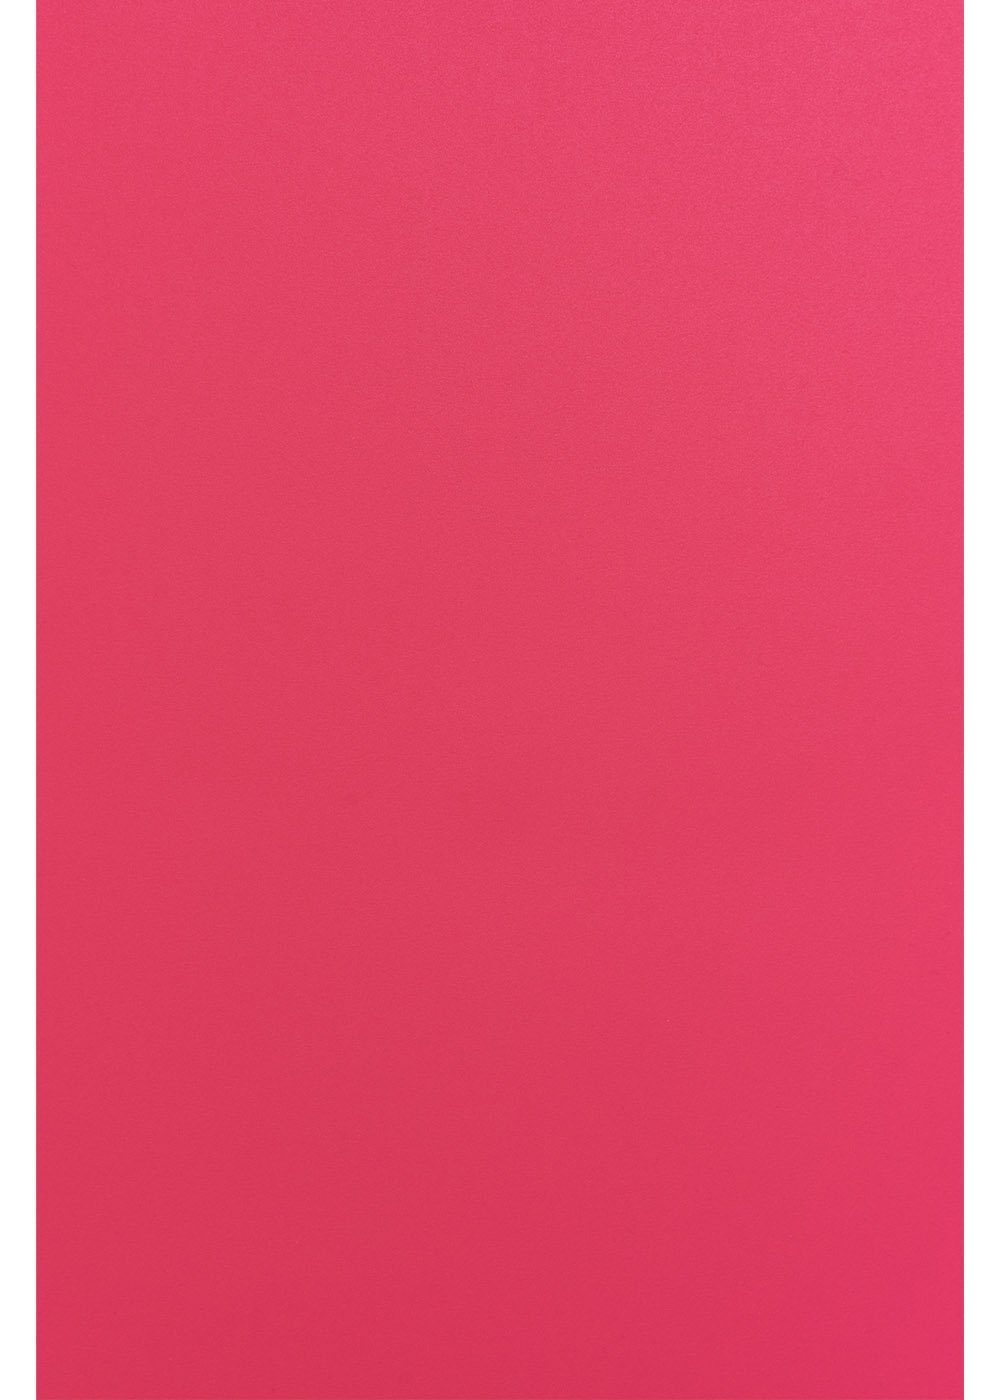 Rosa 30x20 Reflektierende Neon Transferfolie, Hilltop mehrfarbig, Transparentpapier cm Textilfolie,